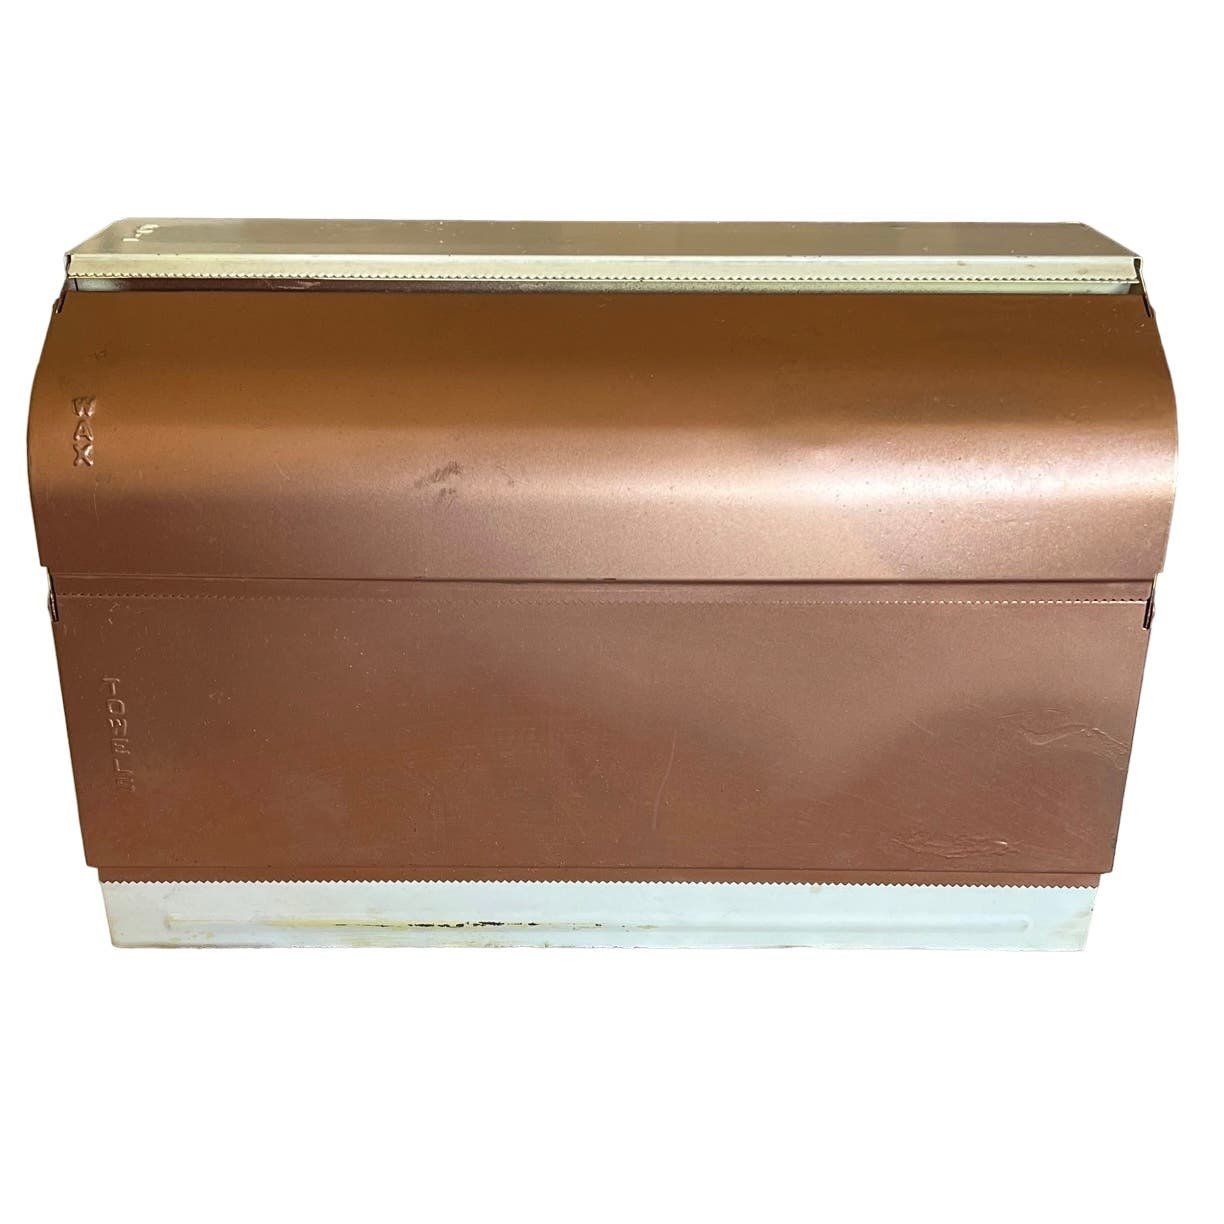 Vintage Metal Kitchen Foil Wax Paper Towel Dispenser Wall Mount Copper/Cream gQng0o7C2